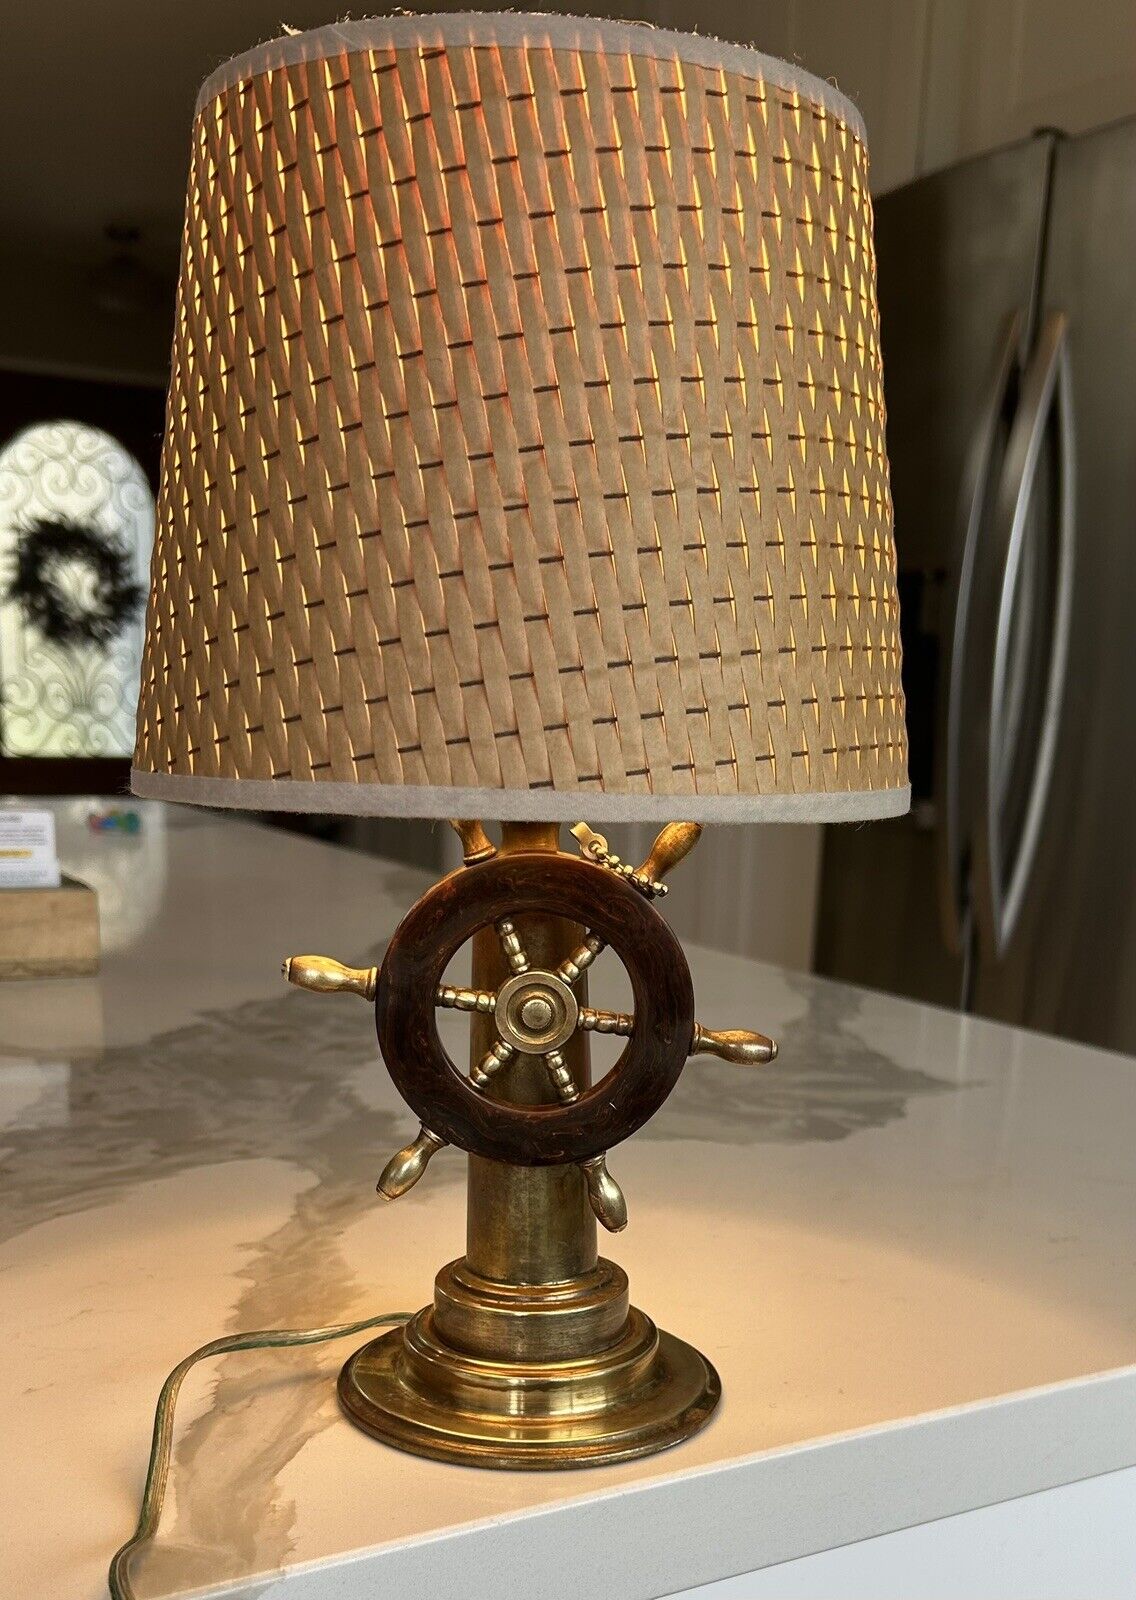 1950s vintage ship wheel lamp